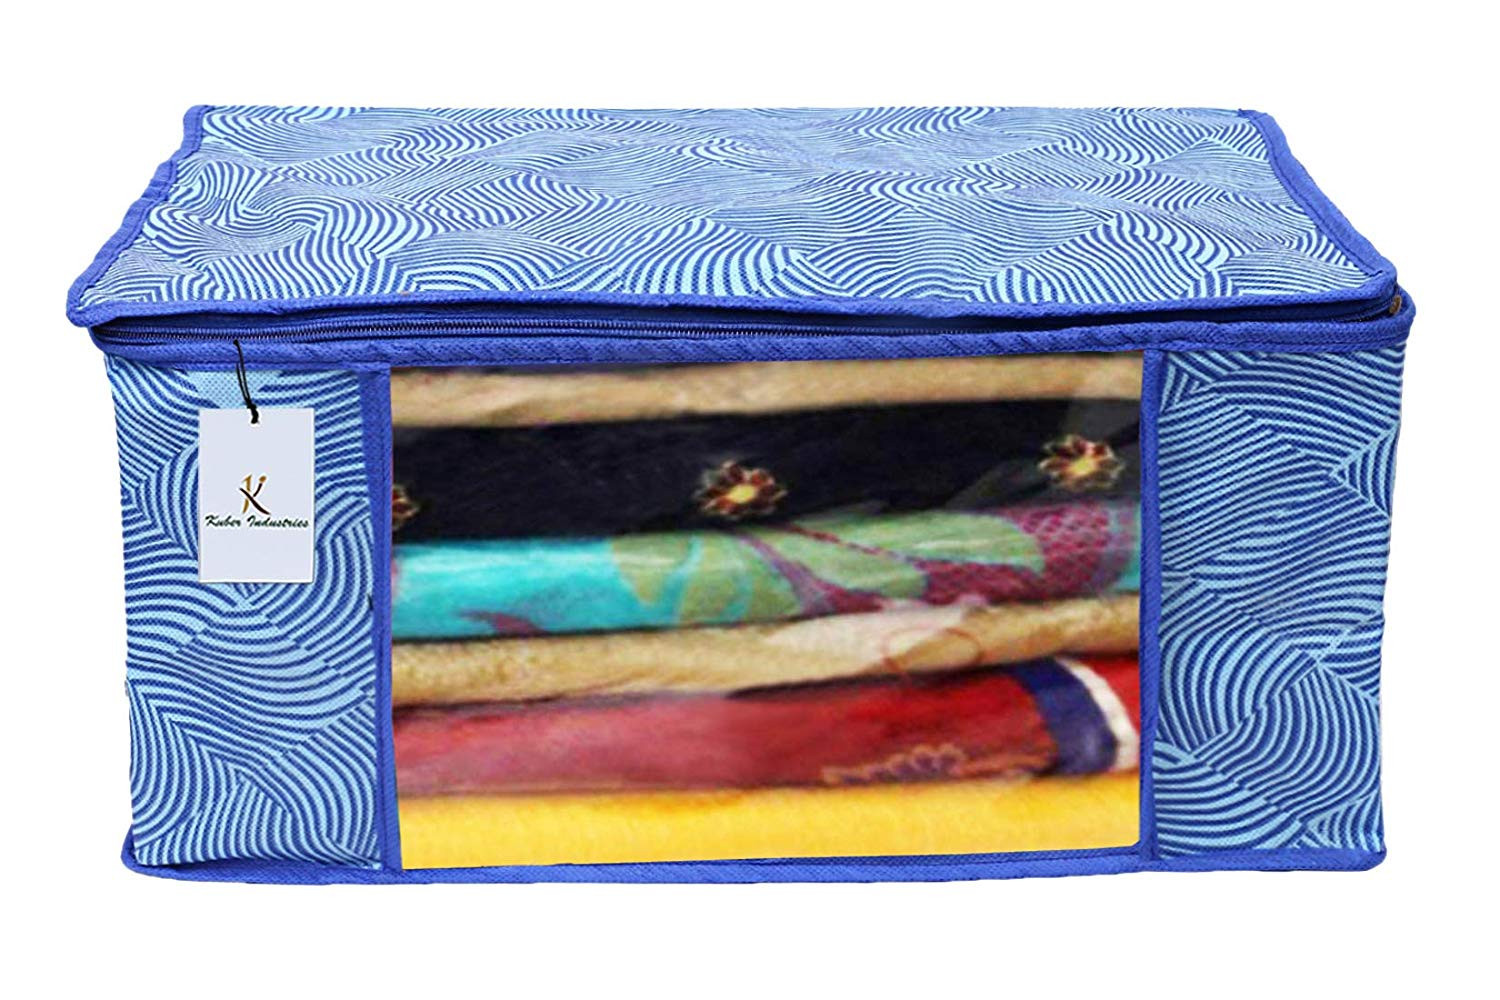 Kuber Industries Leheriya Printed Non Woven Fabric Saree Cover Set with Transparent Window, Extra Large, Orange & Blue -CTKTC40793